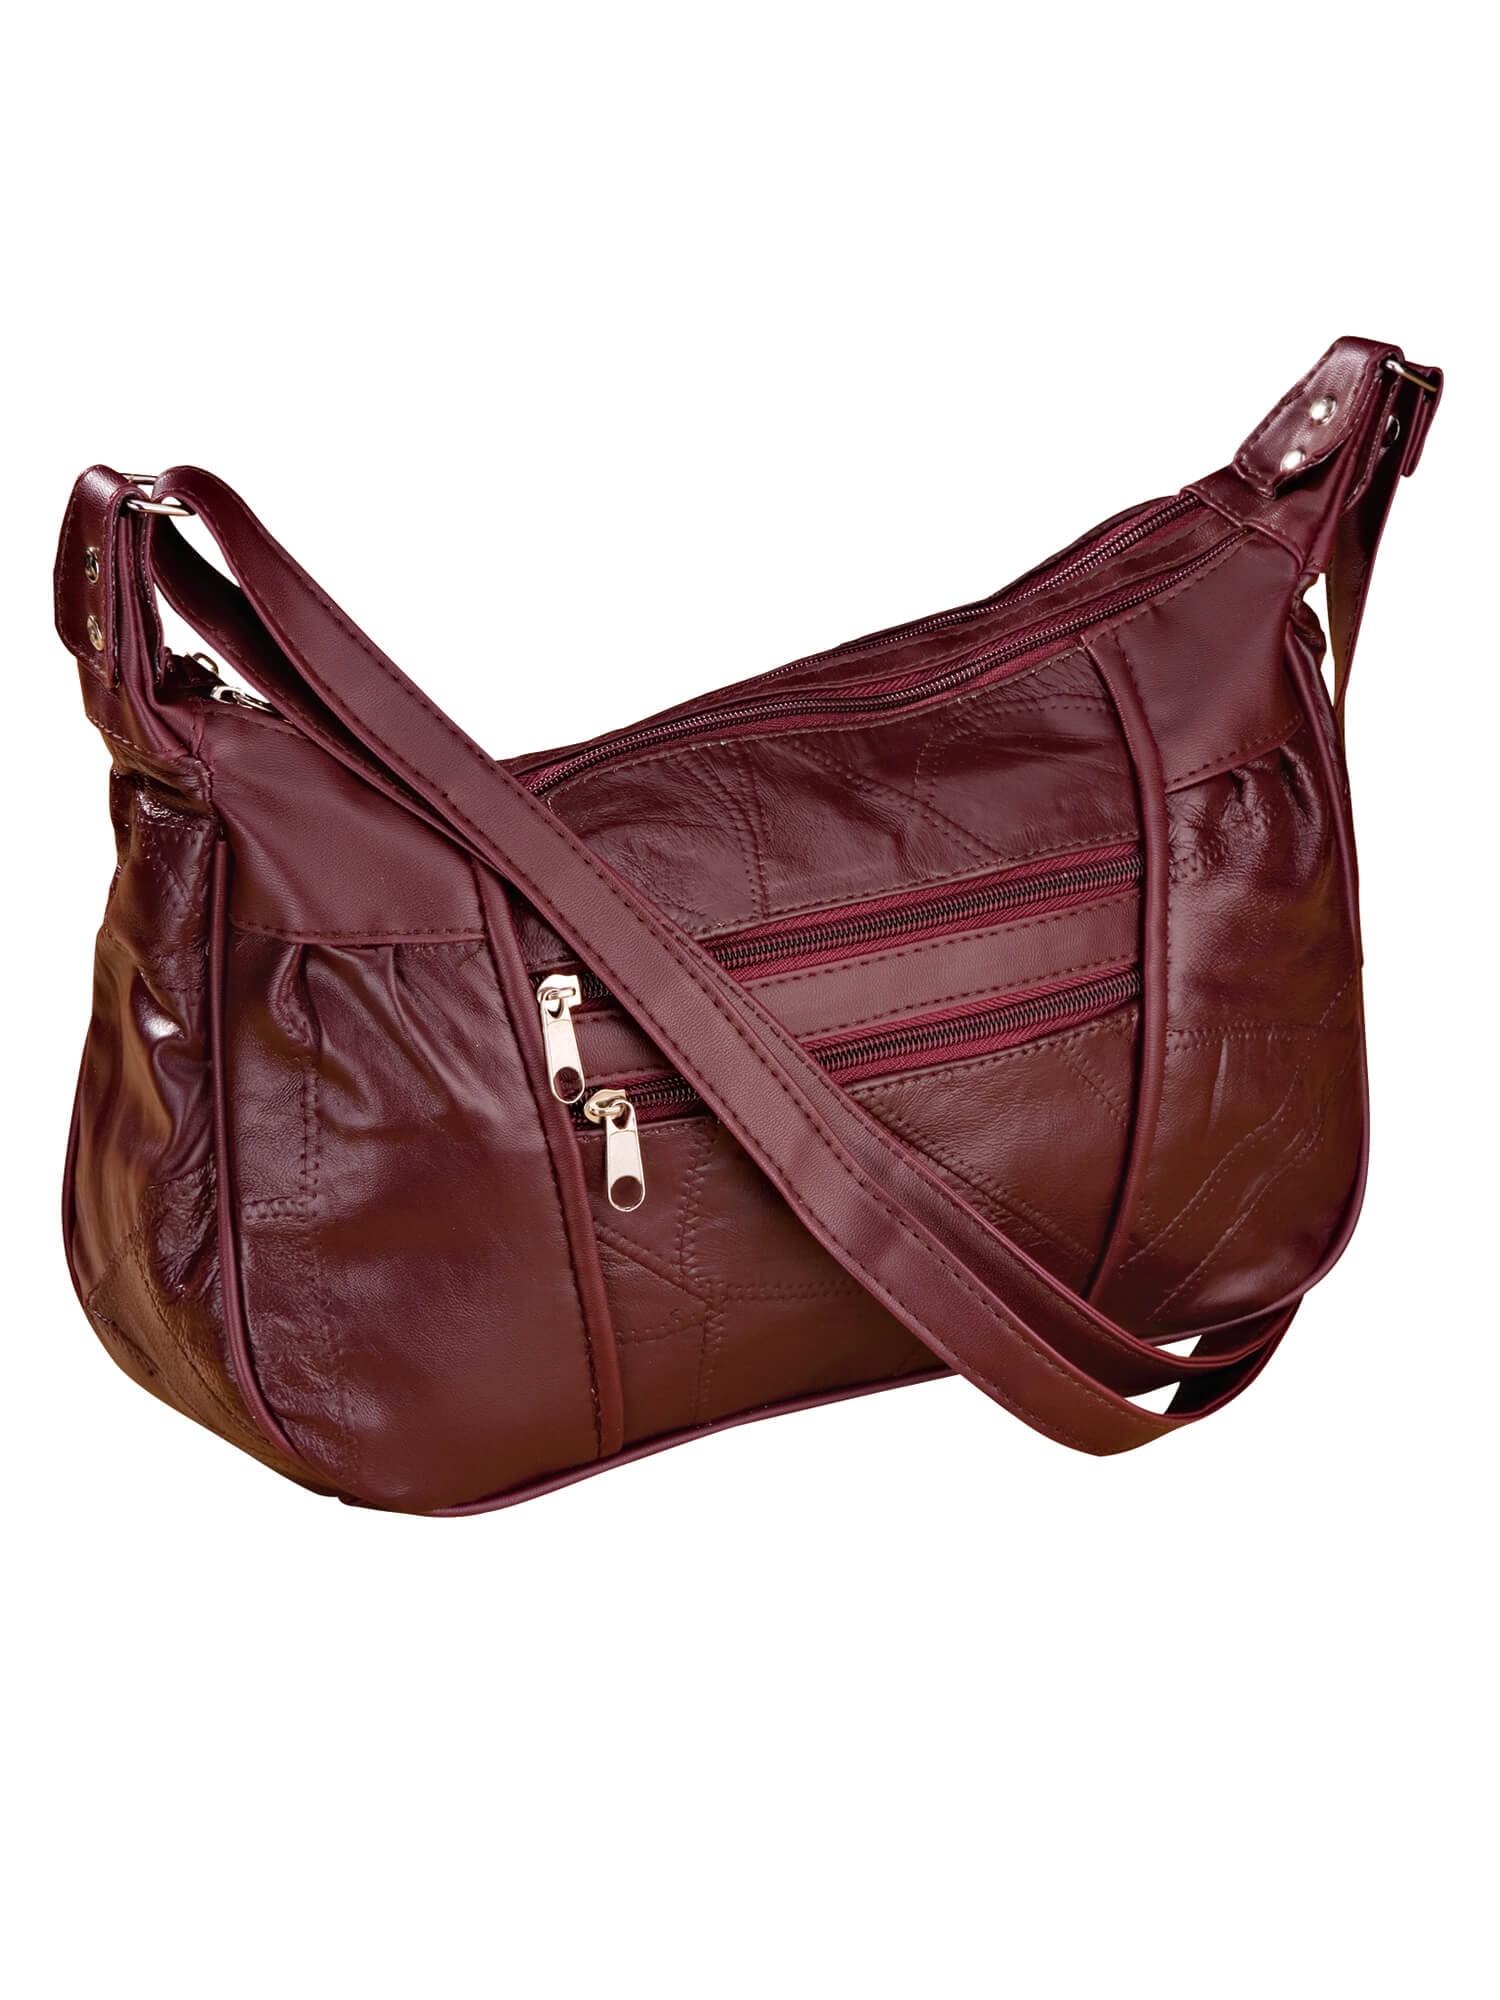 My Daily Women Tote Shoulder Bag Red Fox Handbag 